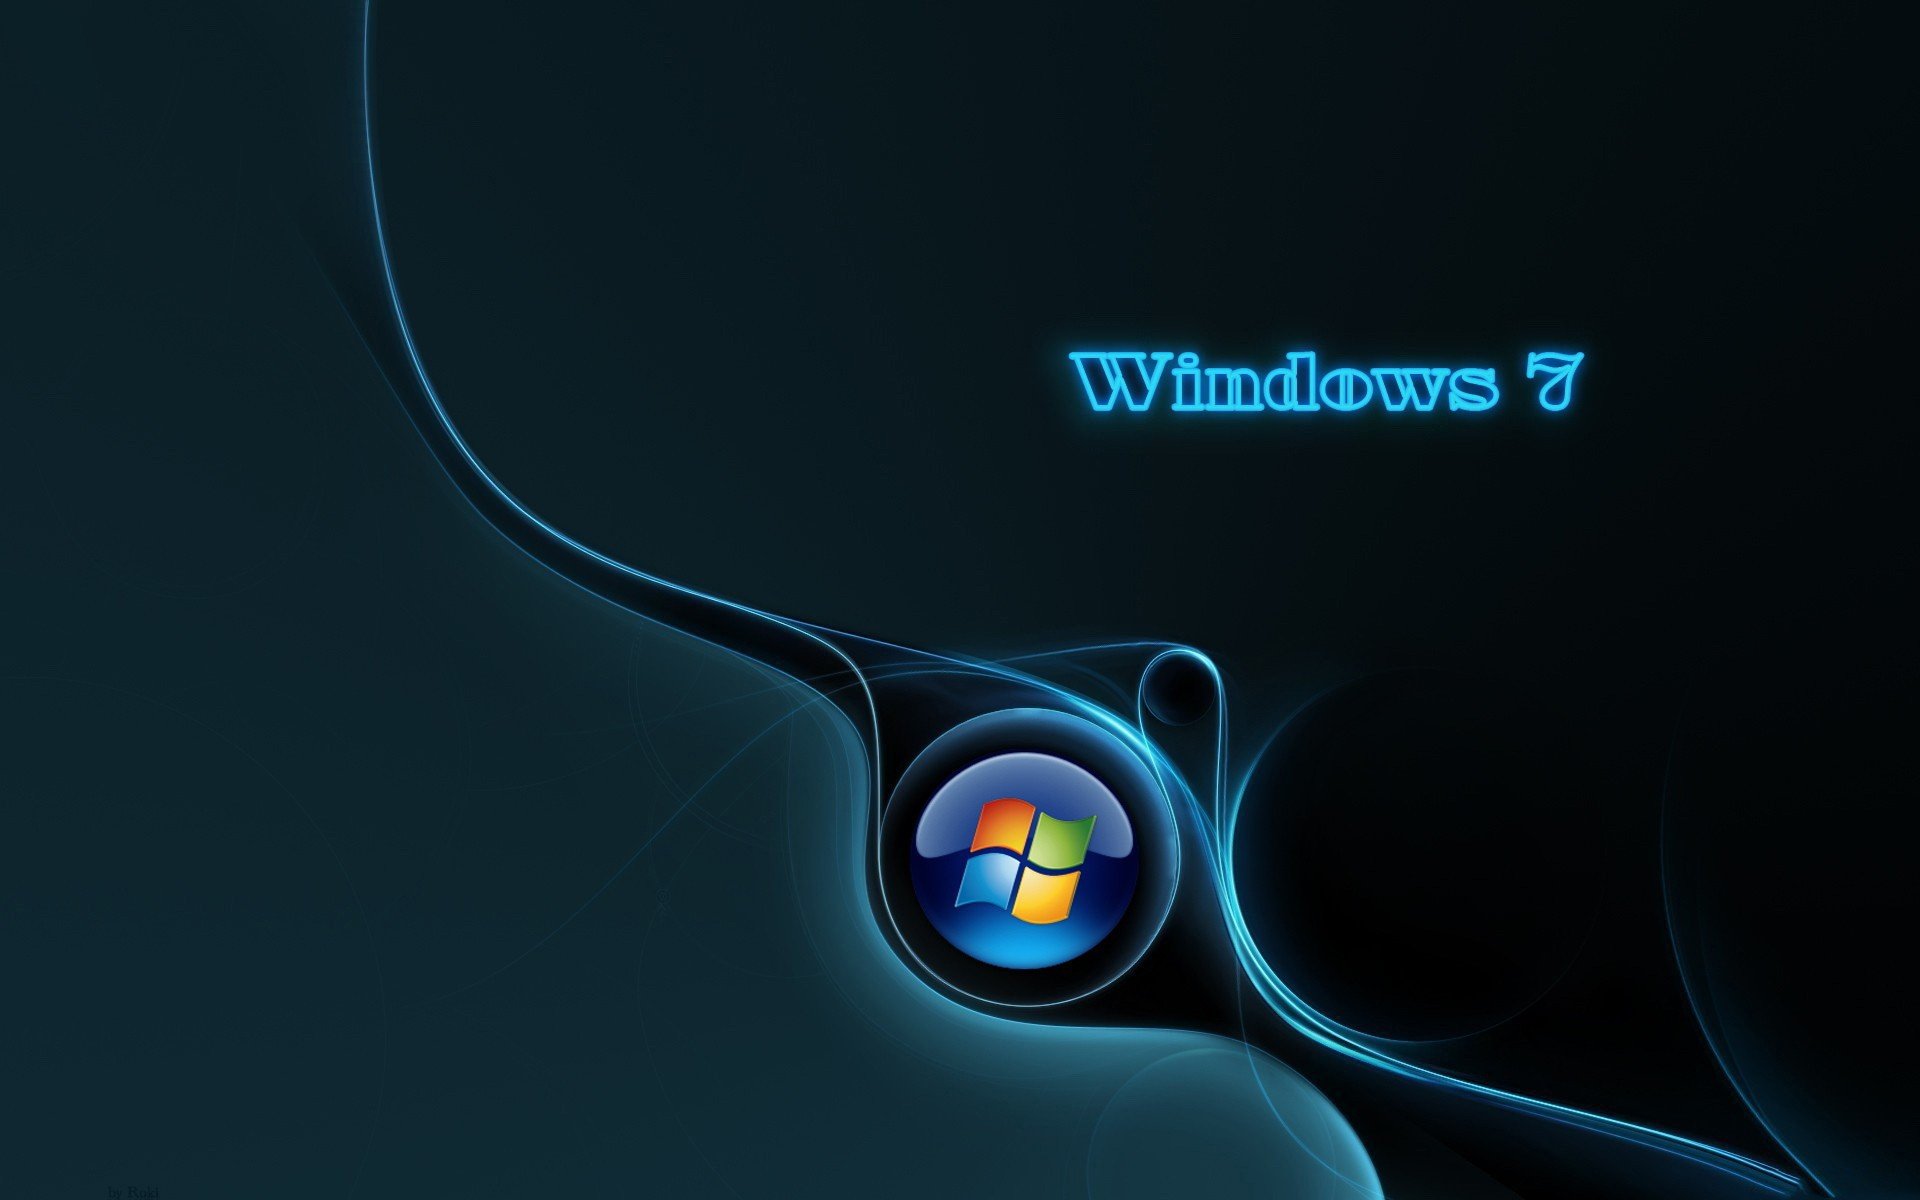 Wallpaper Windows 7 Ultimate Hd 3d Keren Image Num 97